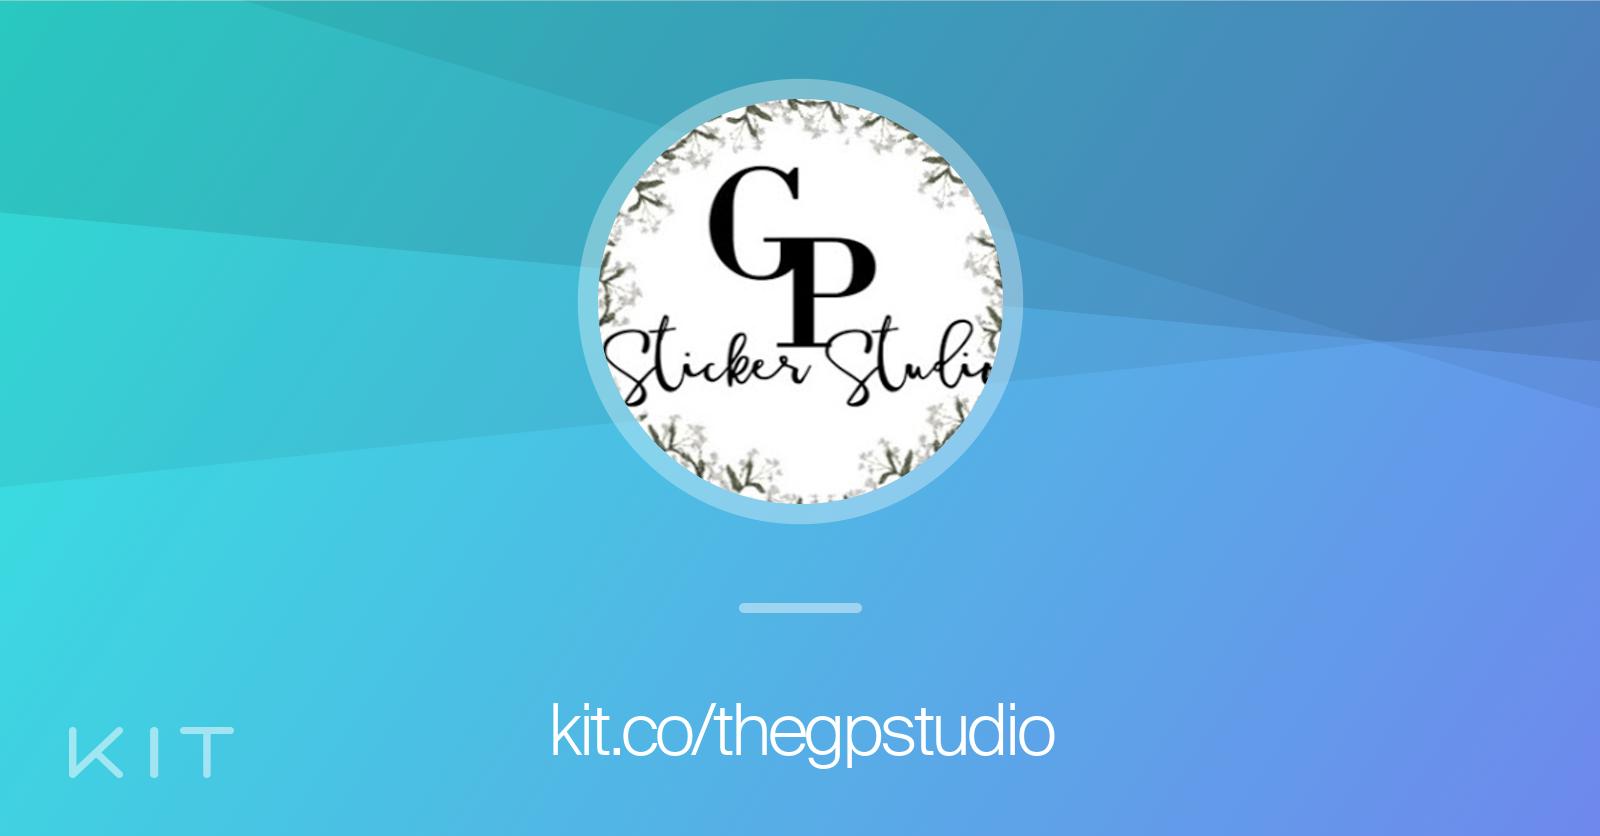 GP Sticker Studio (@thegpstudio) gear • Kit